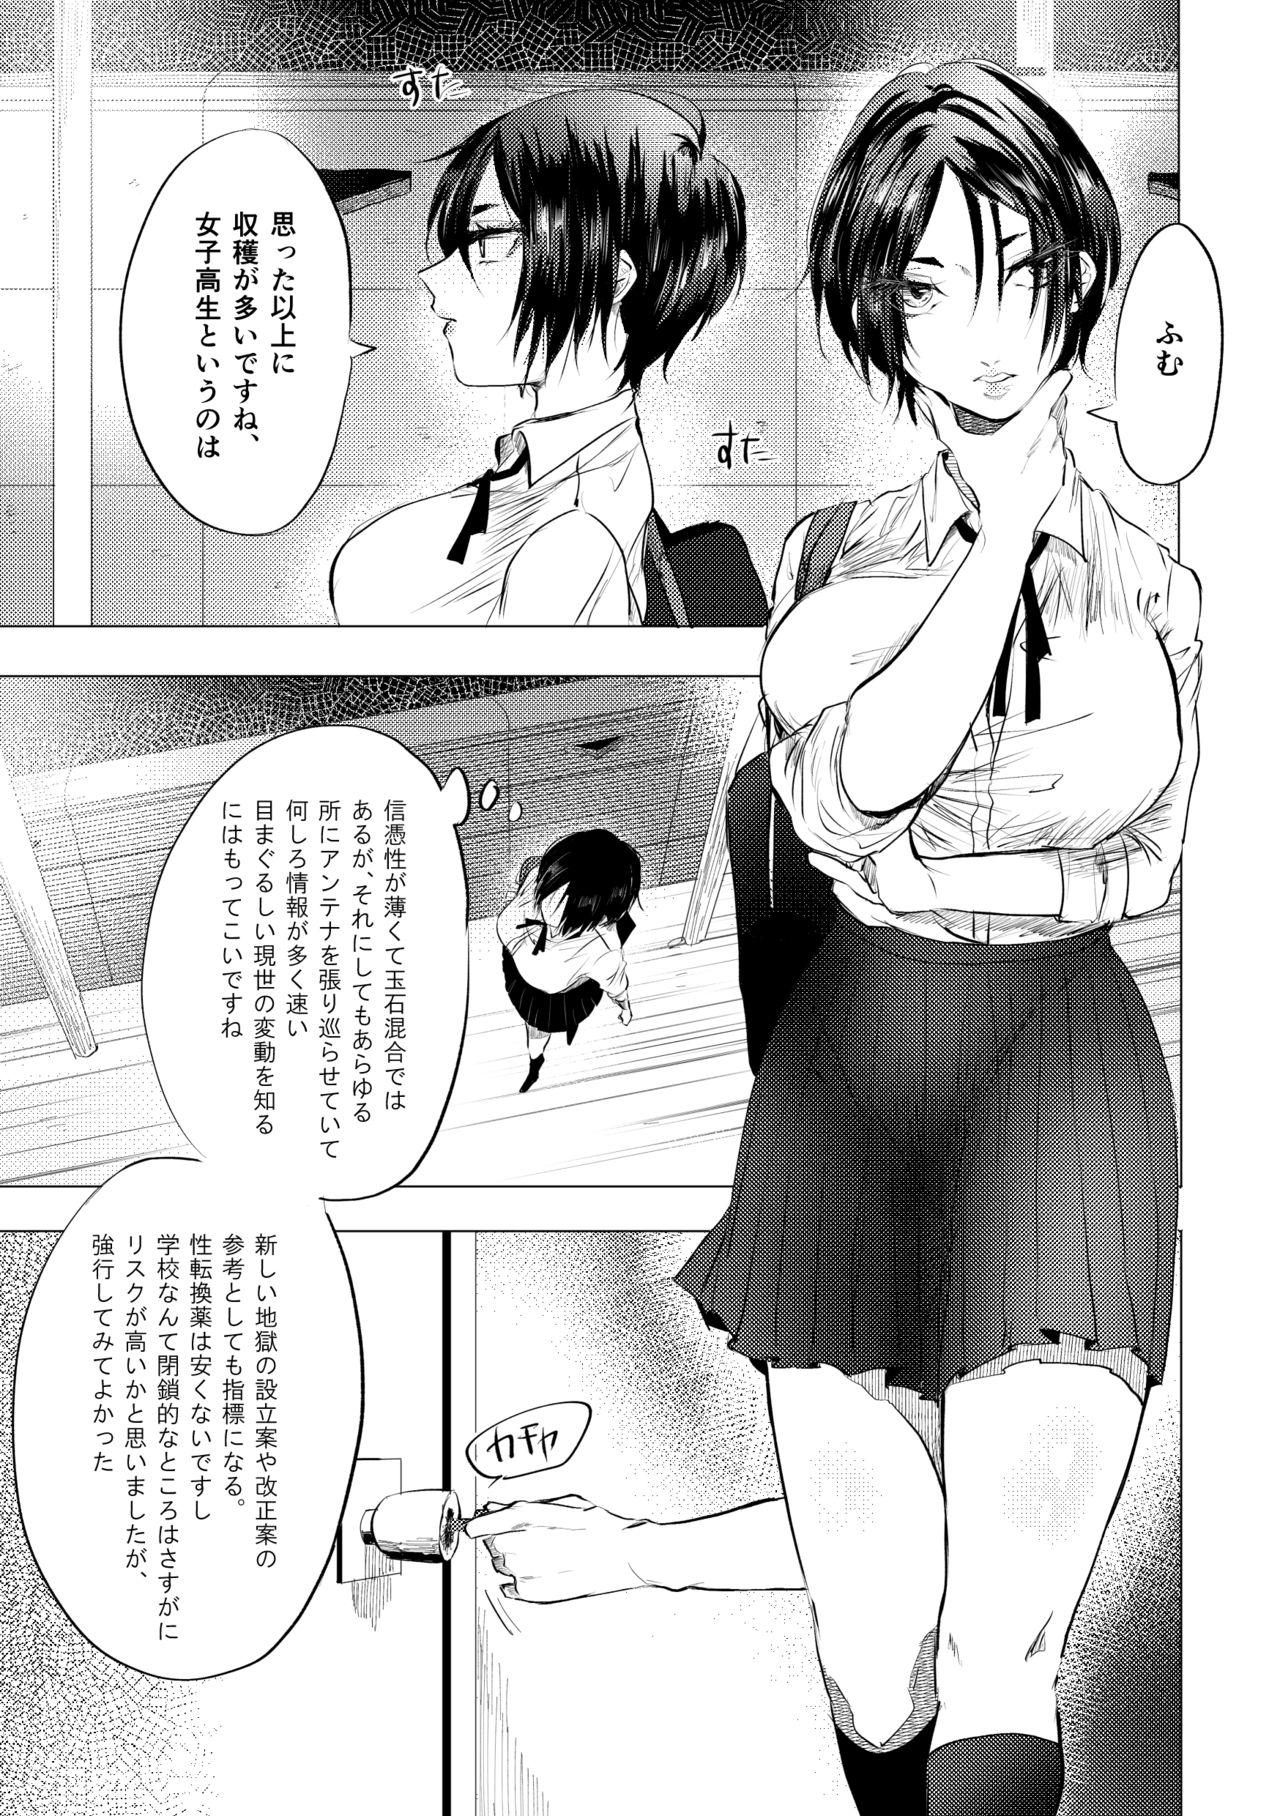 Assfingering 聞いて極楽見て地獄 - Hoozuki no reitetsu Cuck - Page 5